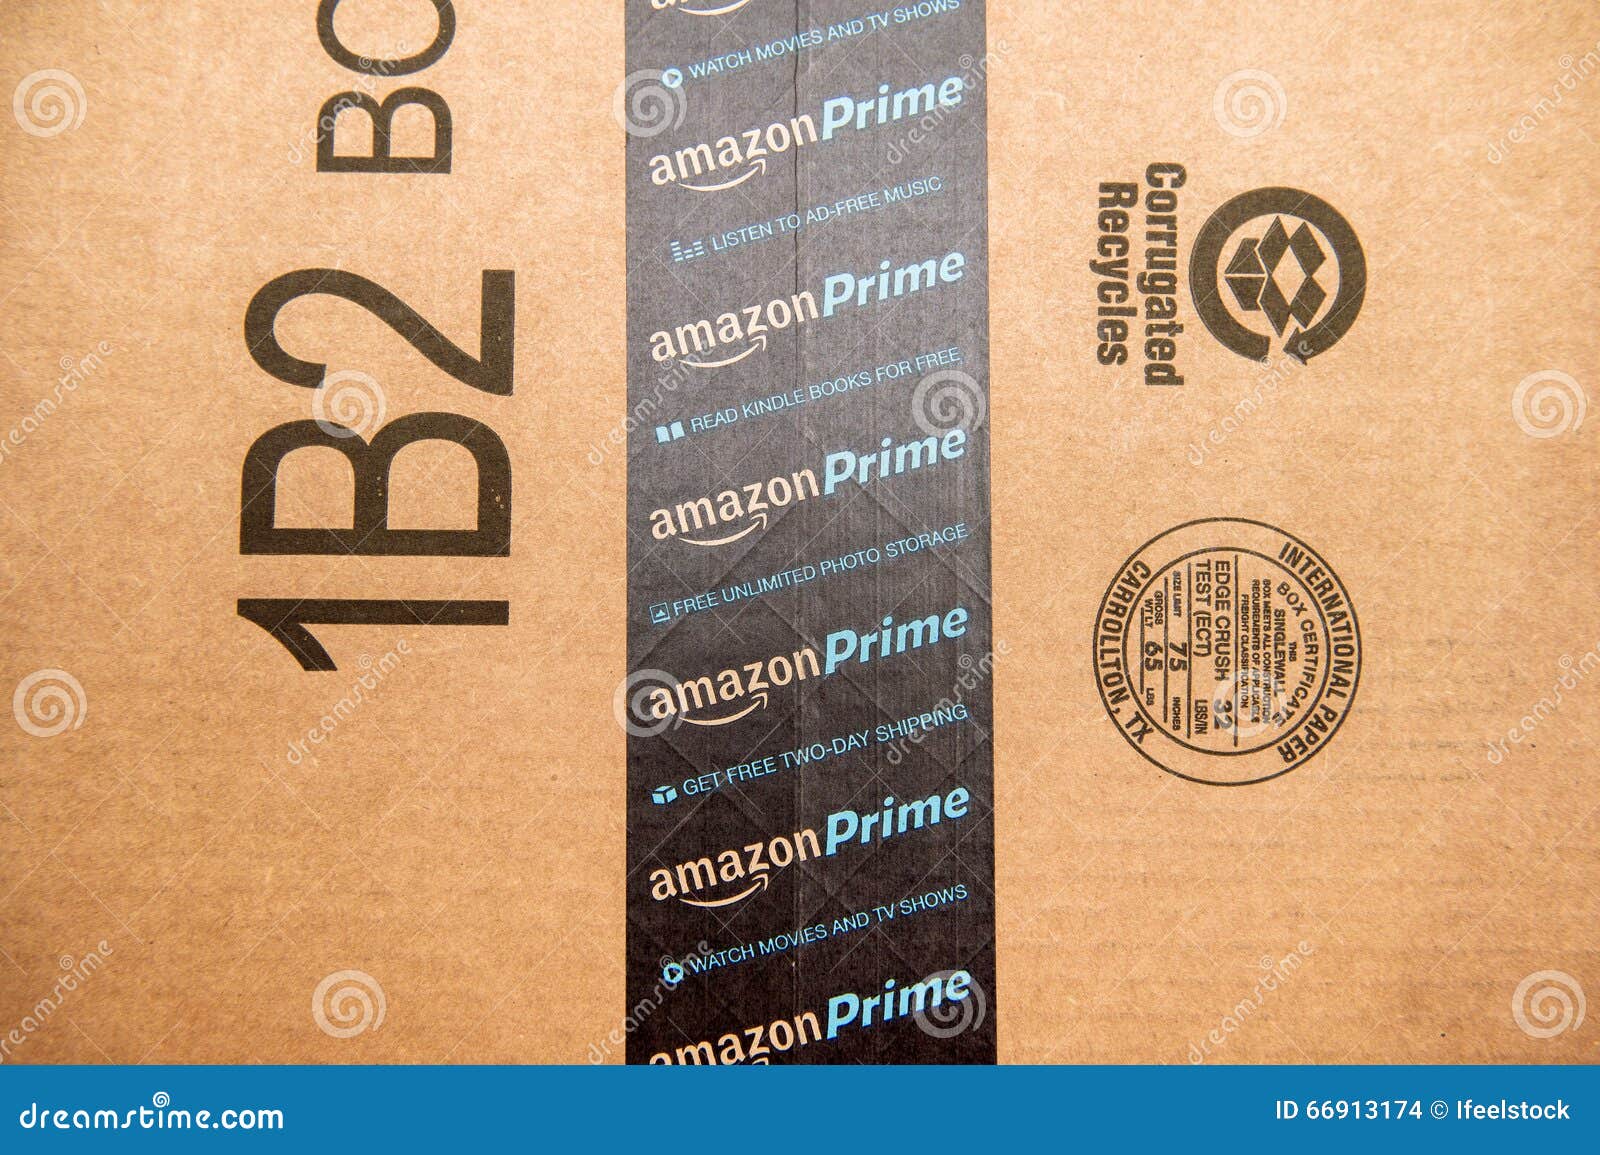 Prime Logotype Printed on Cardboard Box Security Scotch T